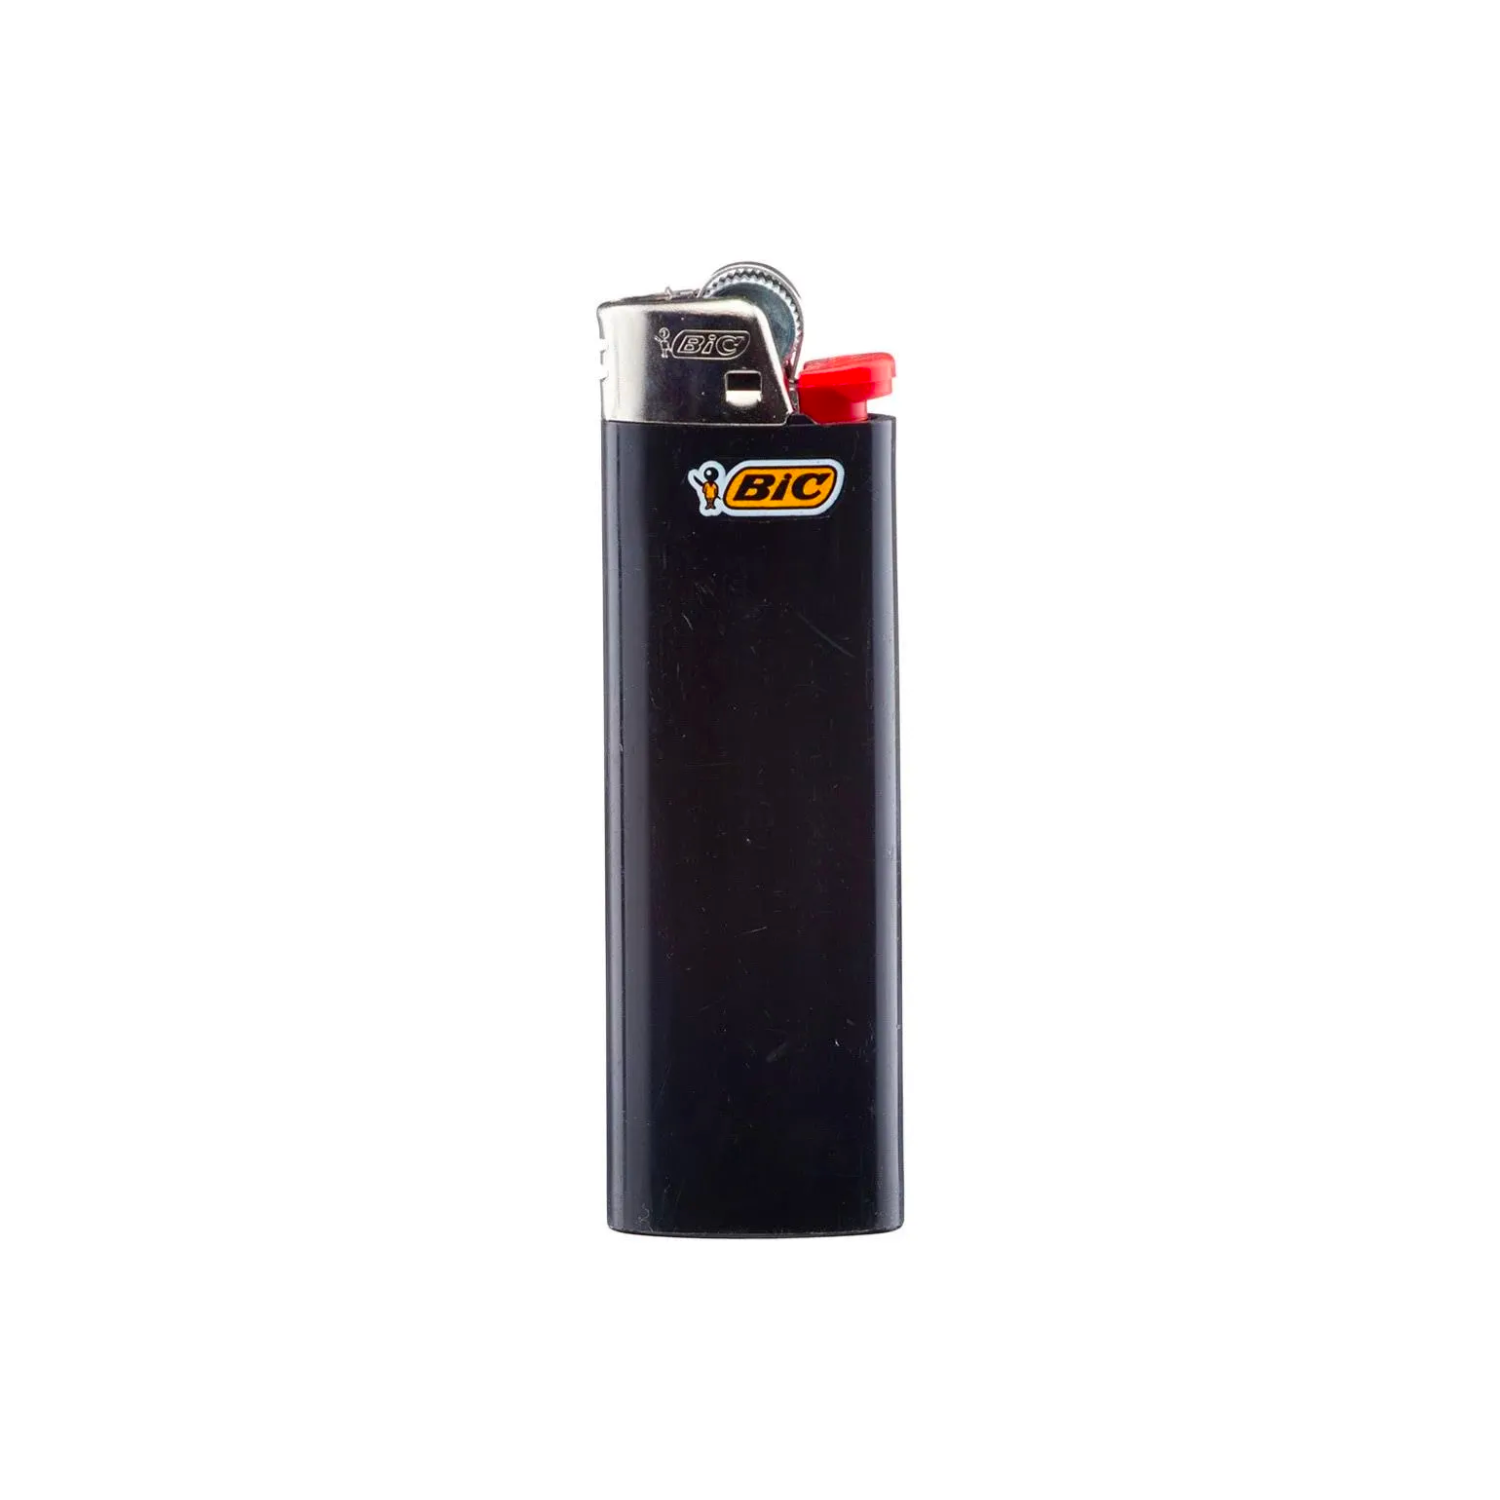 BIC brand lighter in black